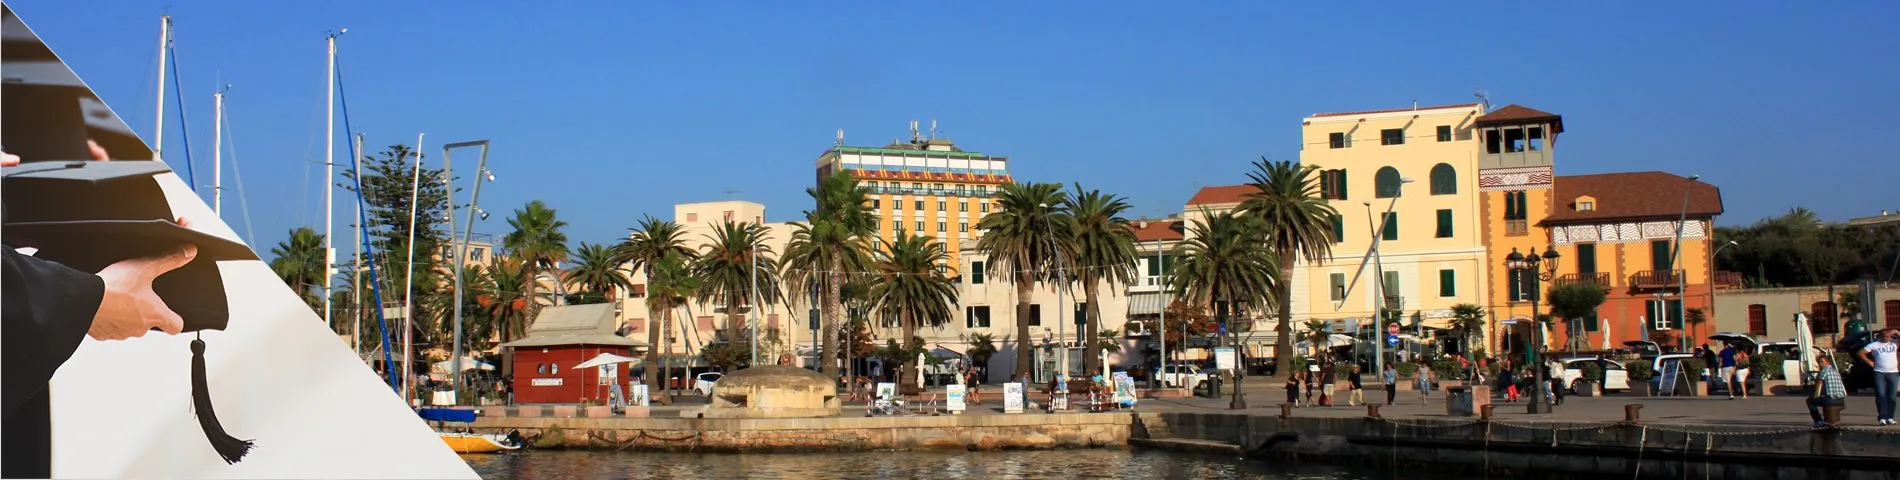 Alguer (Sardenya) - Cursos universitaris